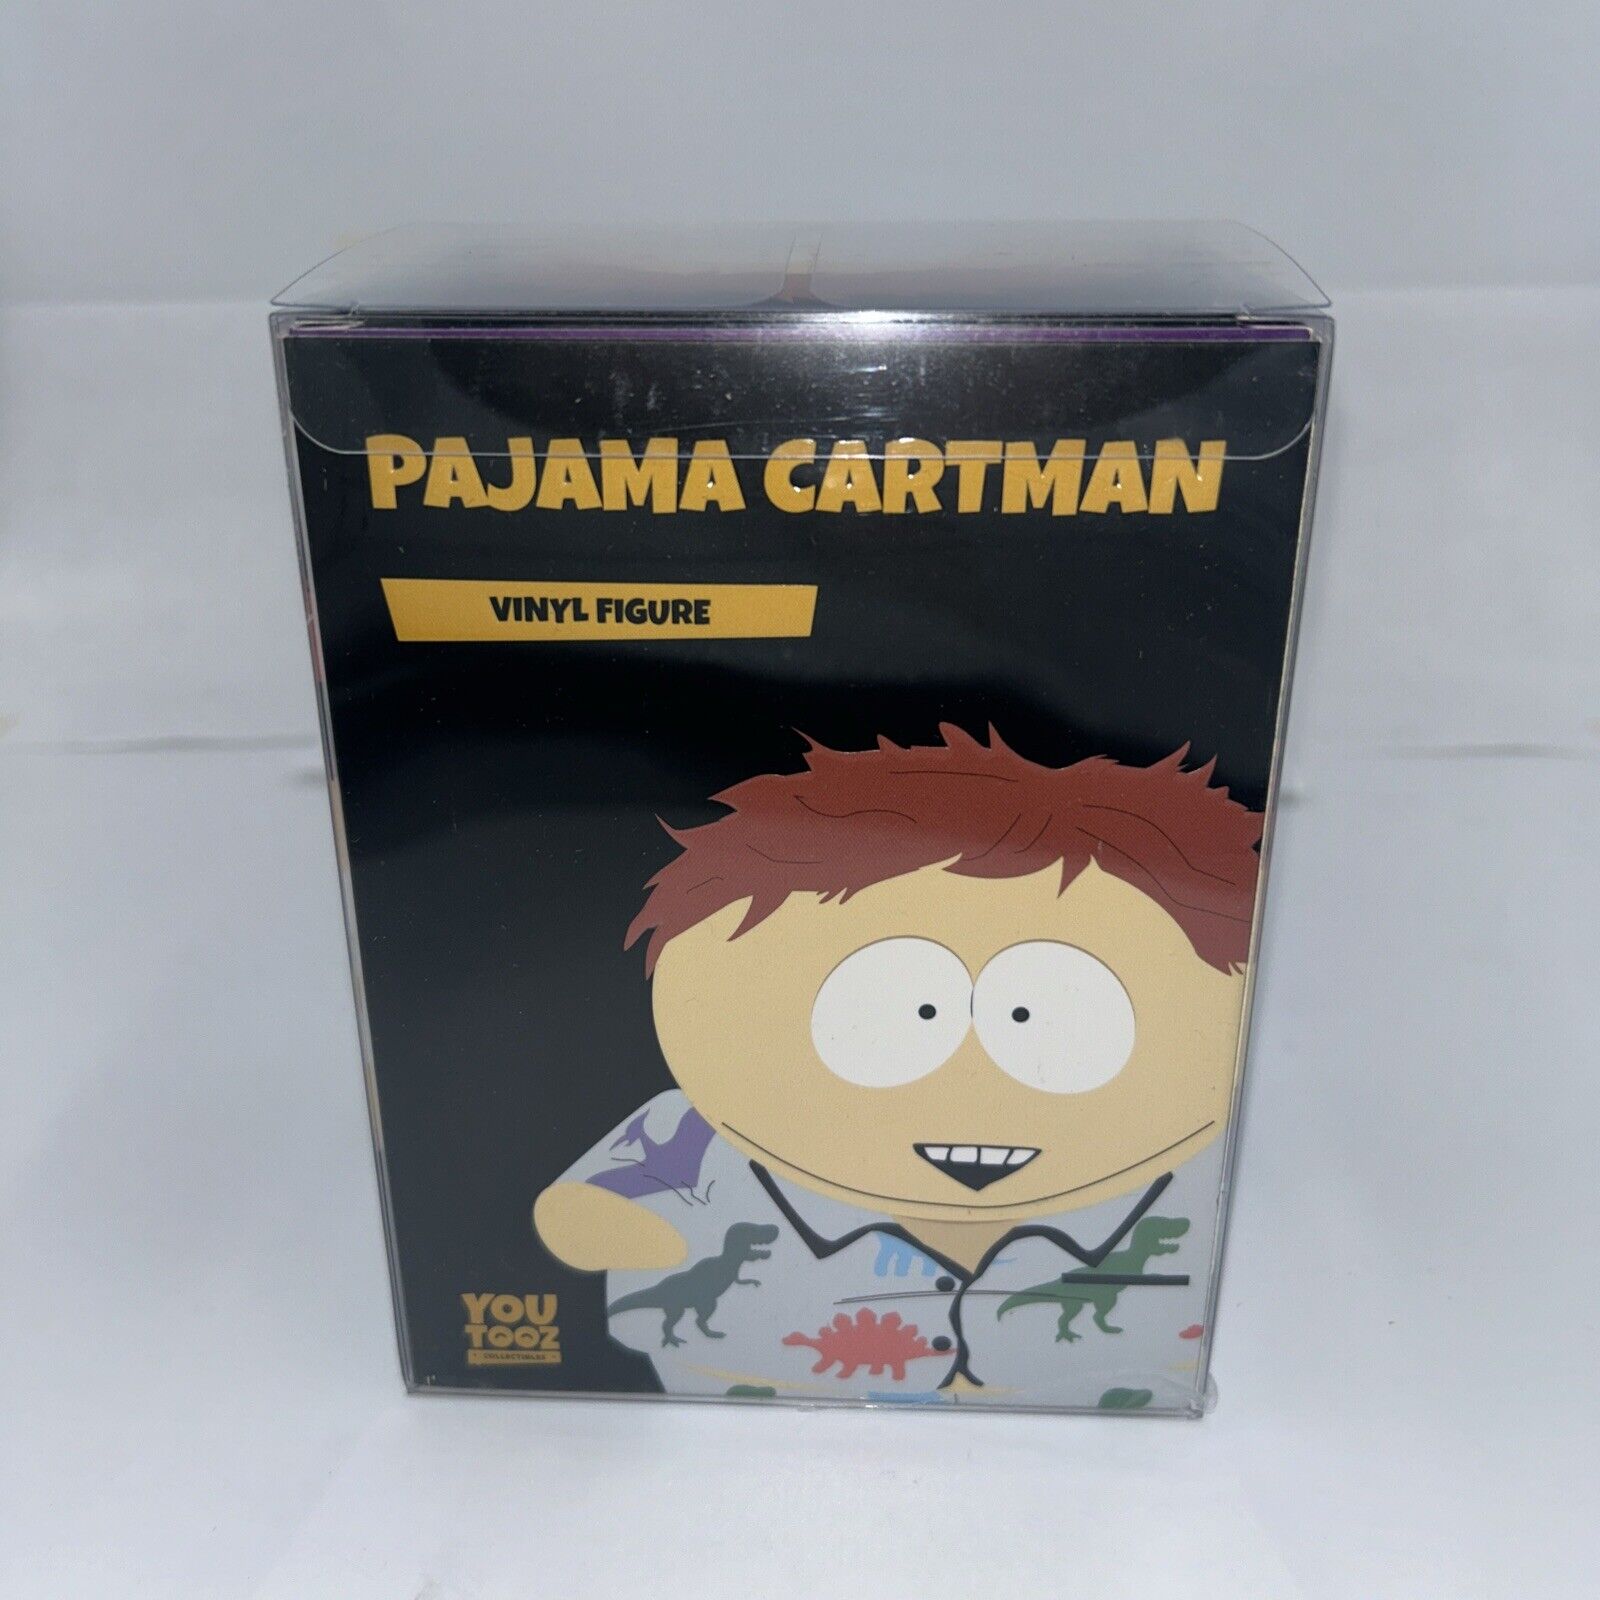 Youtooz * South Park Collection * Pajama Cartman * Vinyl Figure #13 * NEW